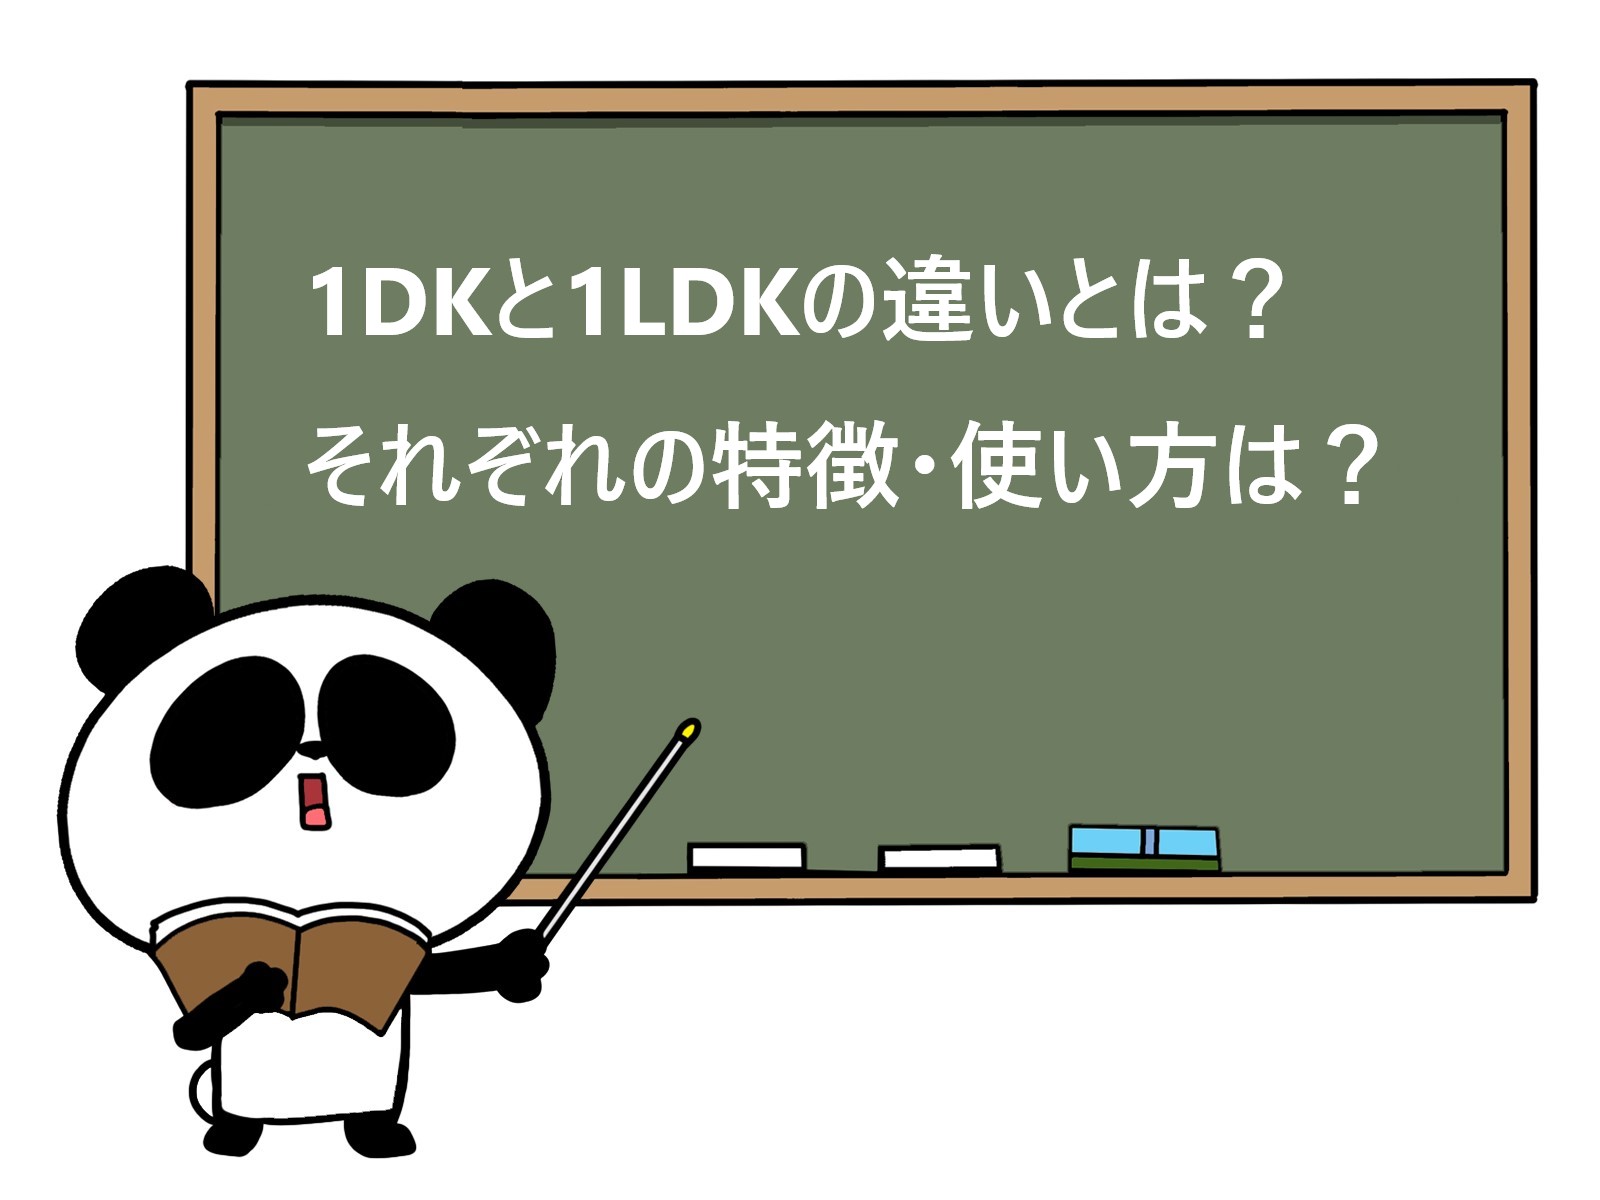 1DKと1LDKの違いは